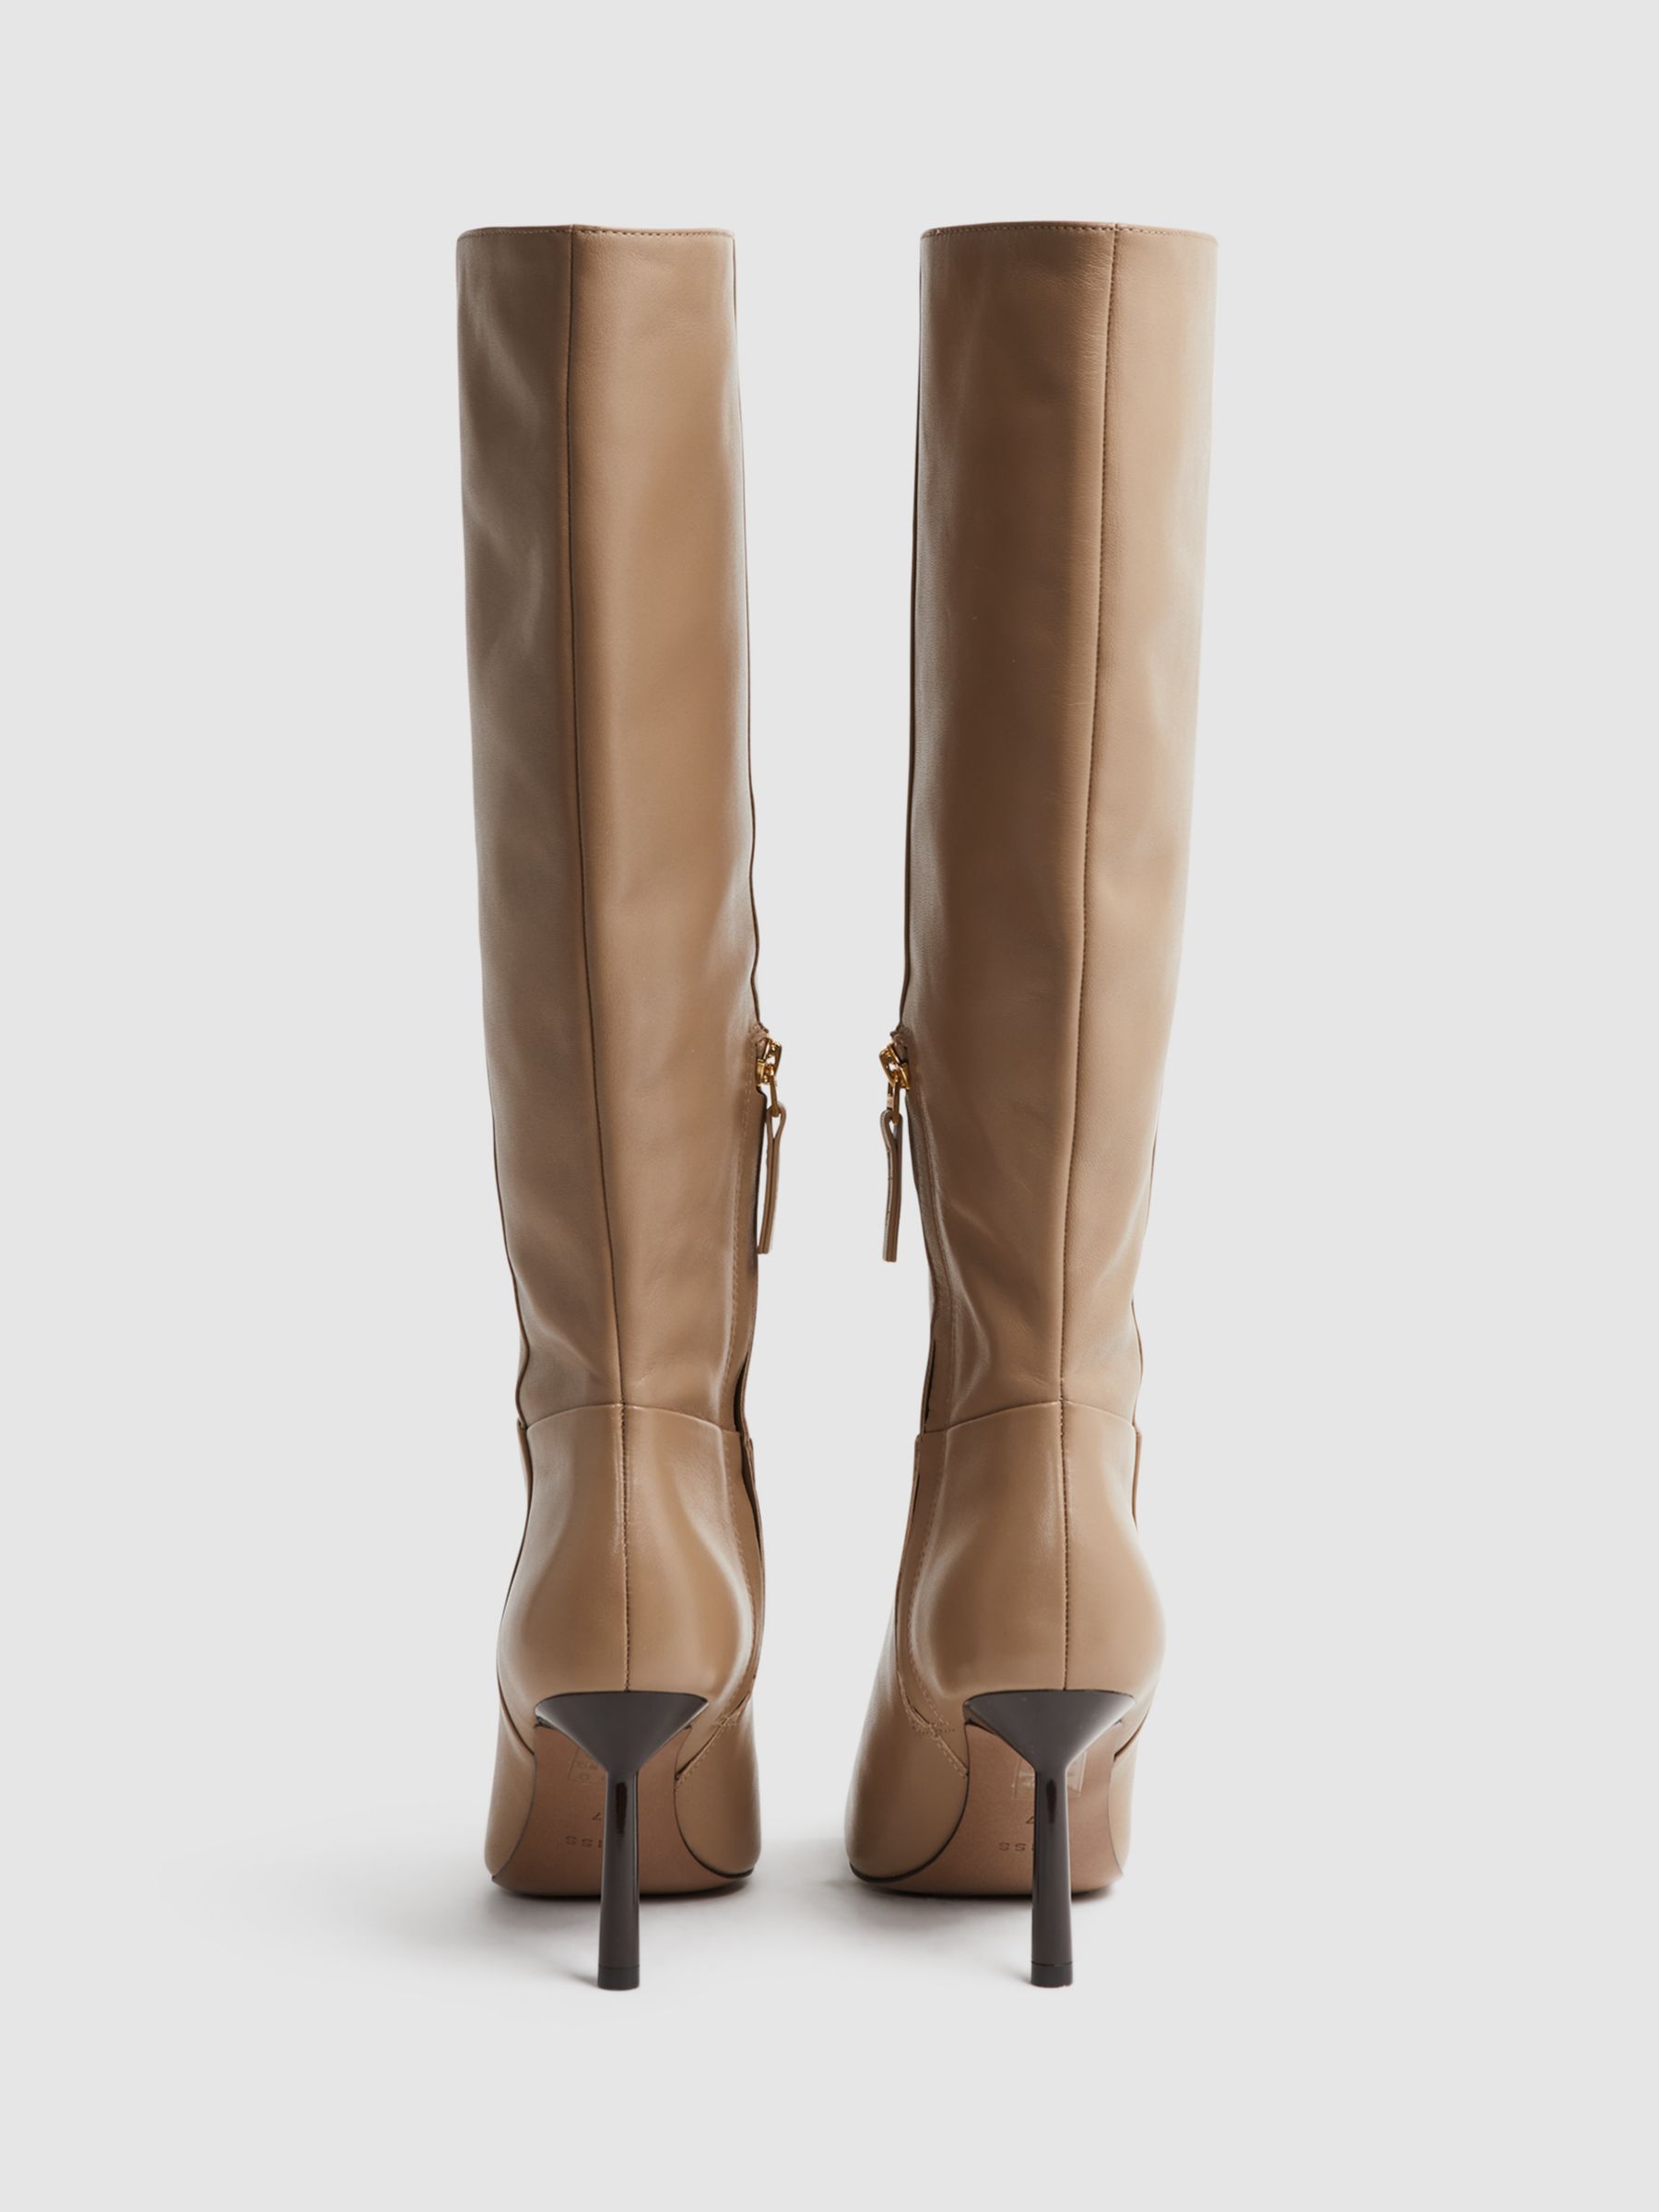 Reiss Gracyn High Heel Leather Knee High Boots, Camel, 6